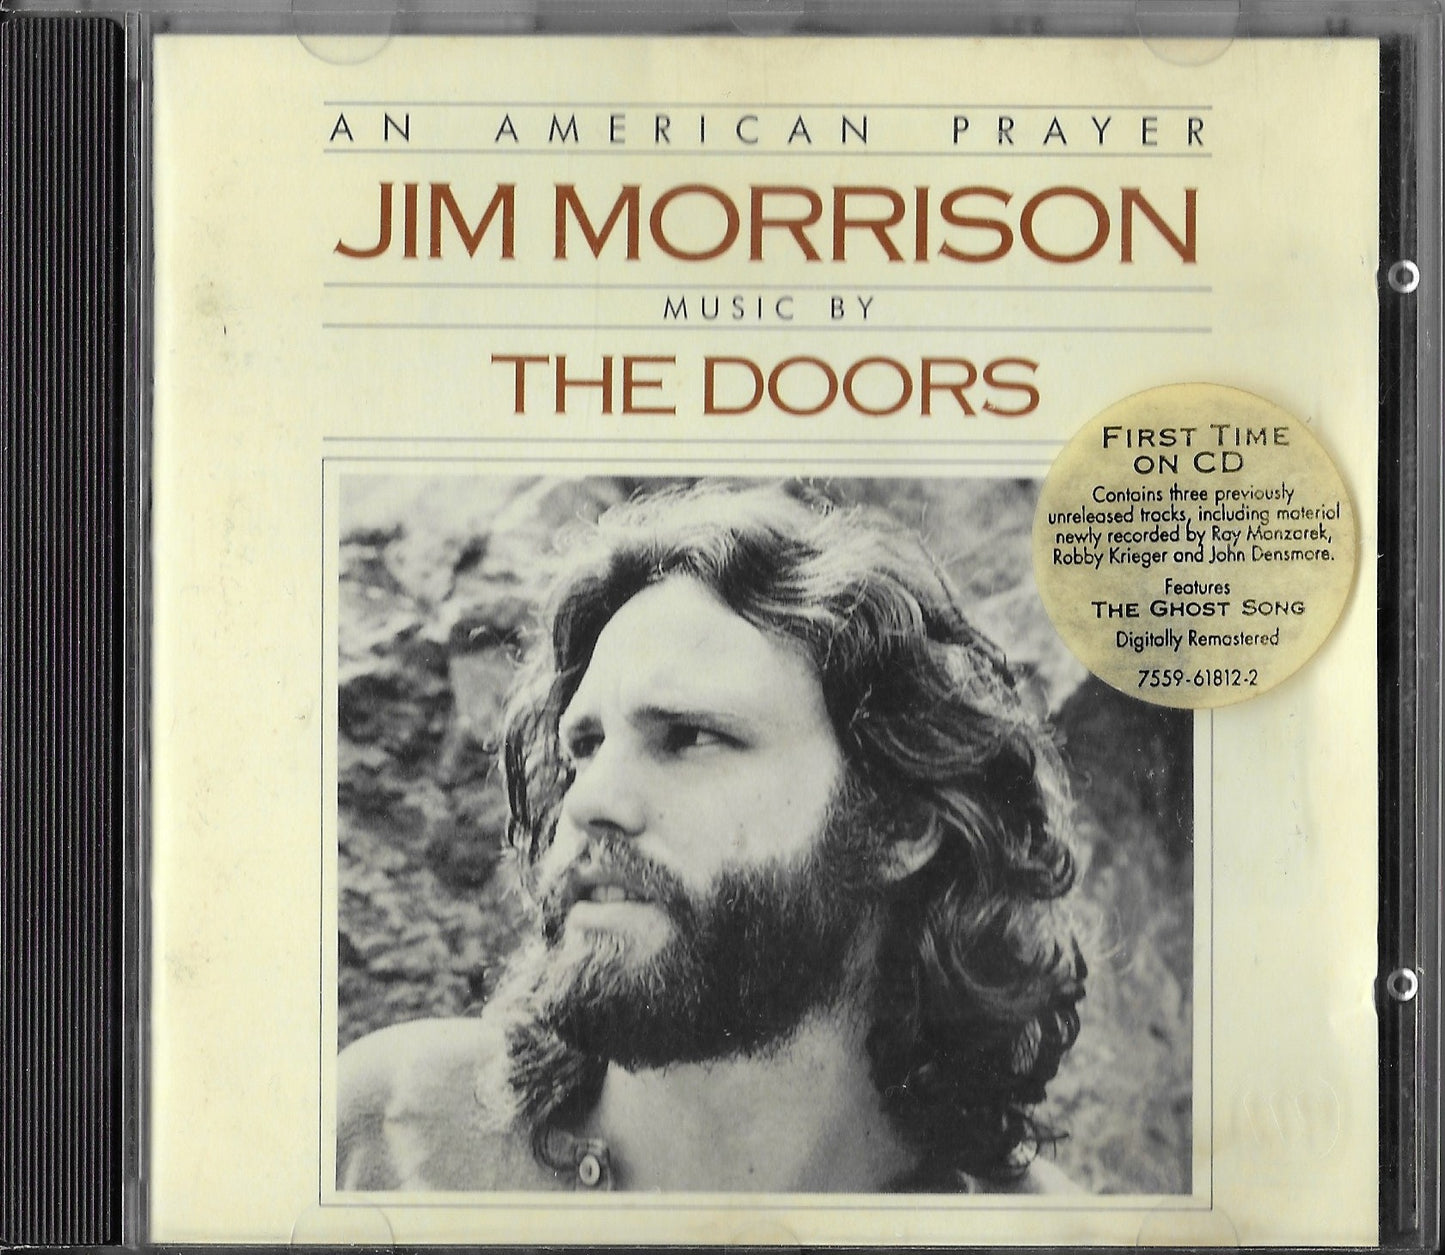 JIM MORRISON Music by The Doors - An American Prayer